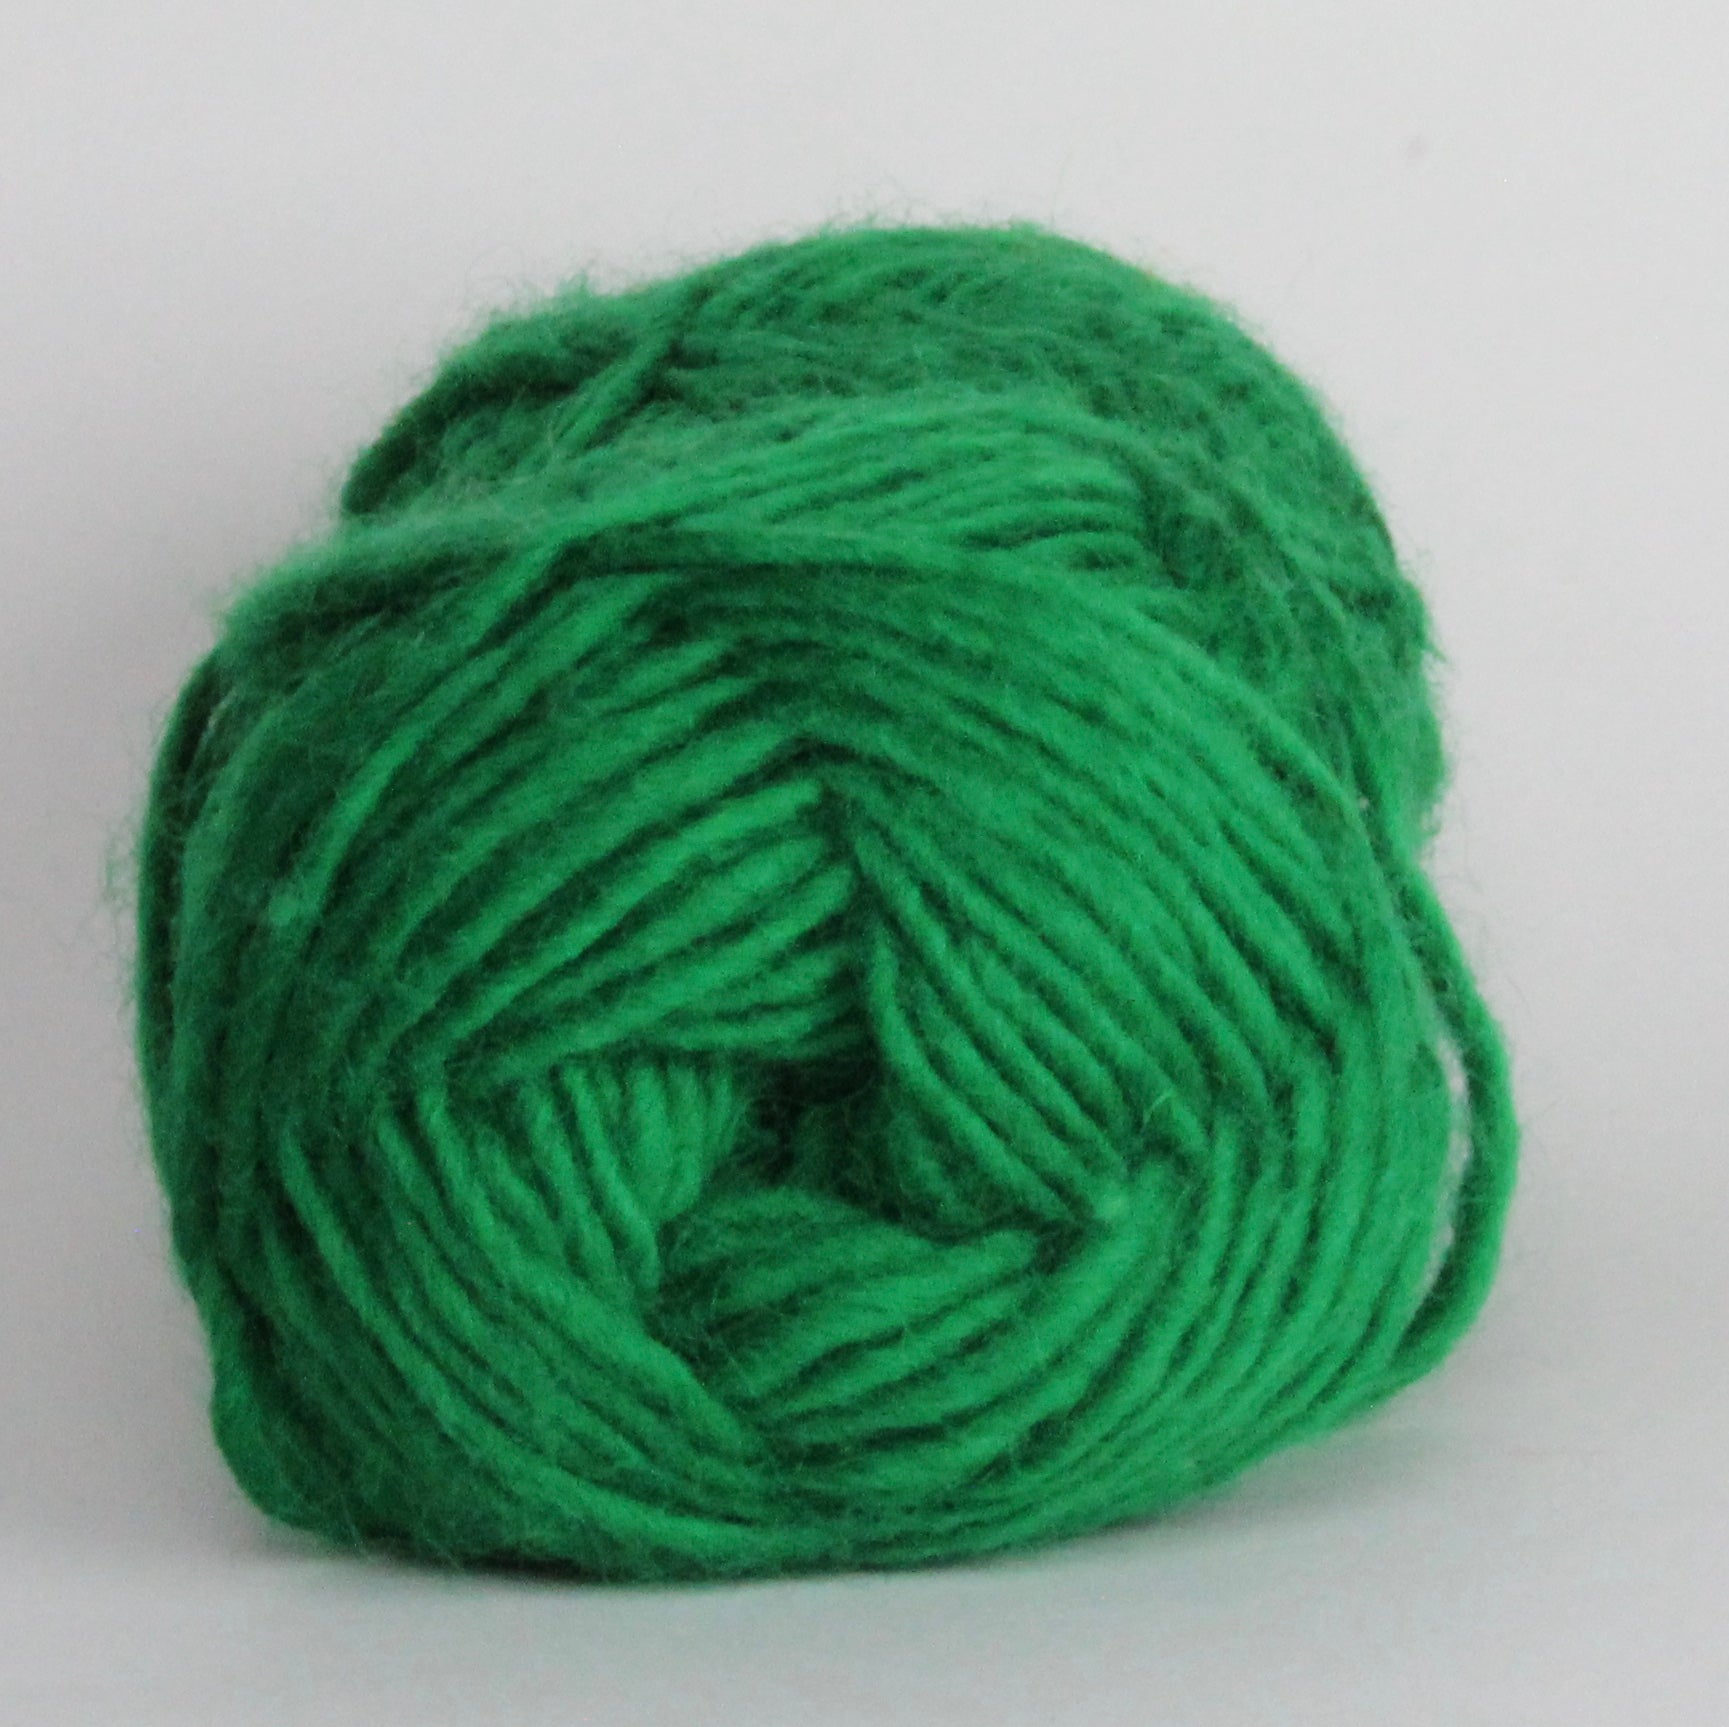 Mauch Chunky Bulky Wool Yarn